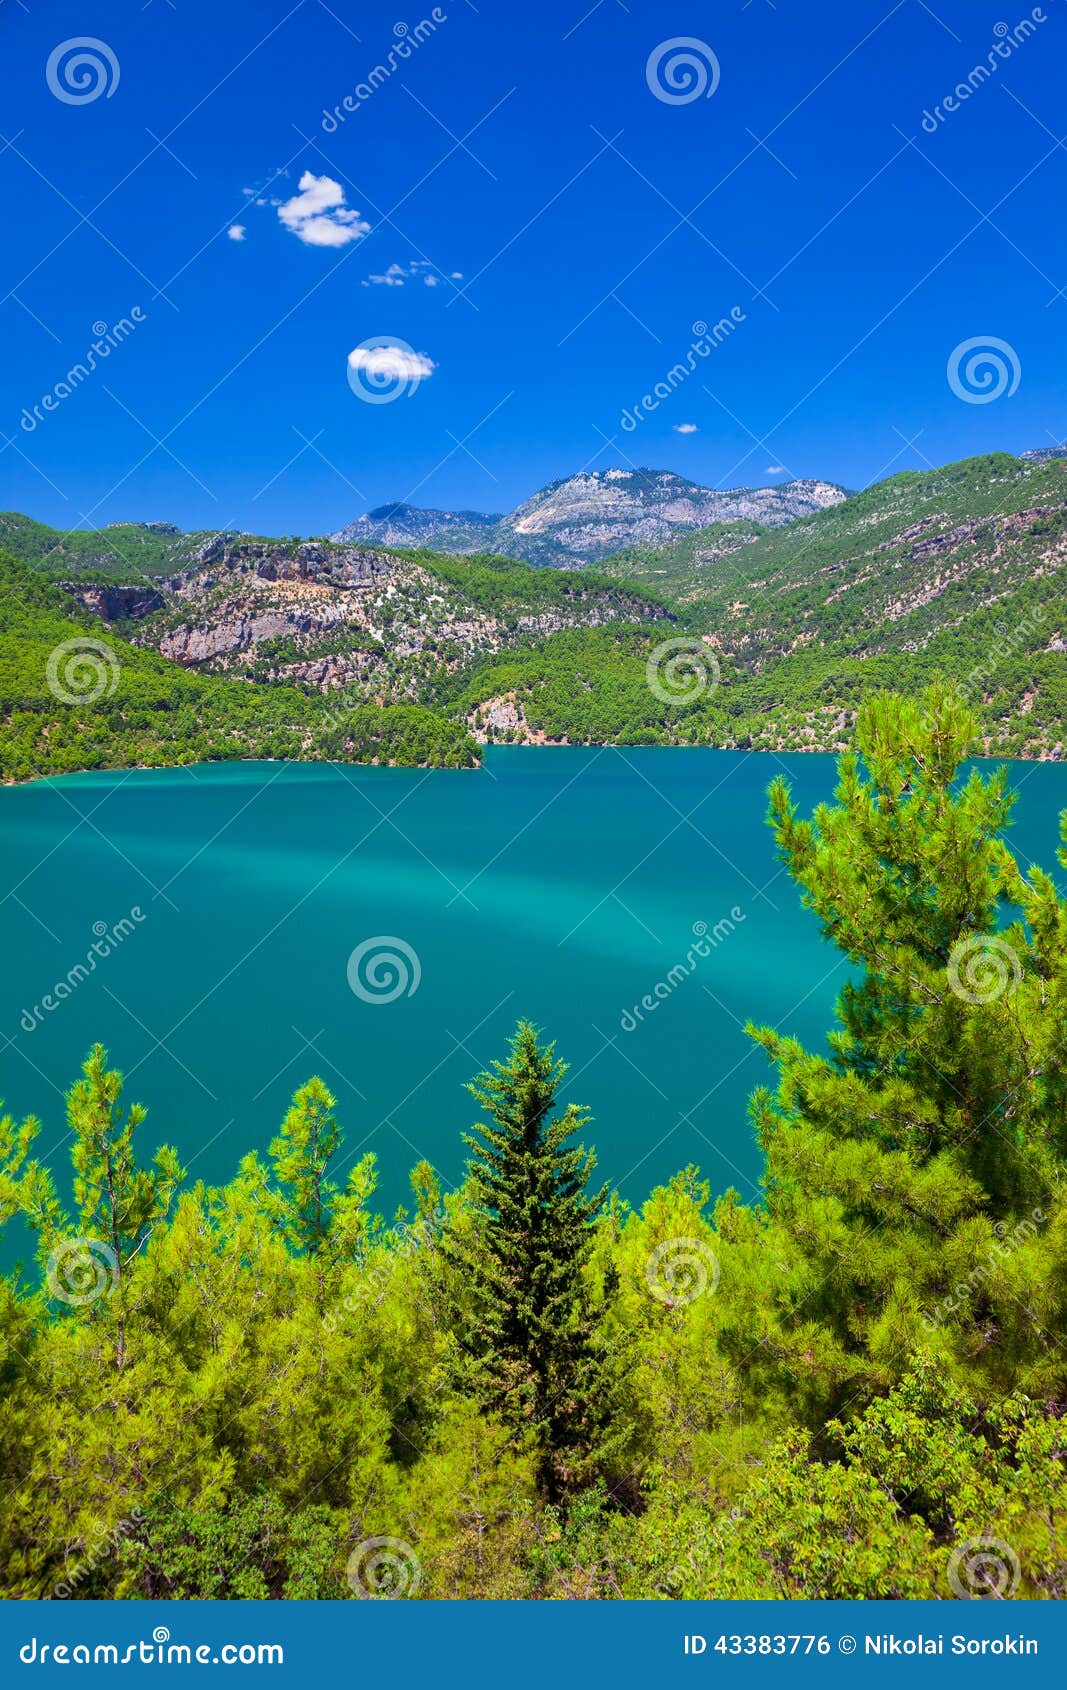 Green Canyon At Turkey Stock Photo Image Of Mountains 43383776